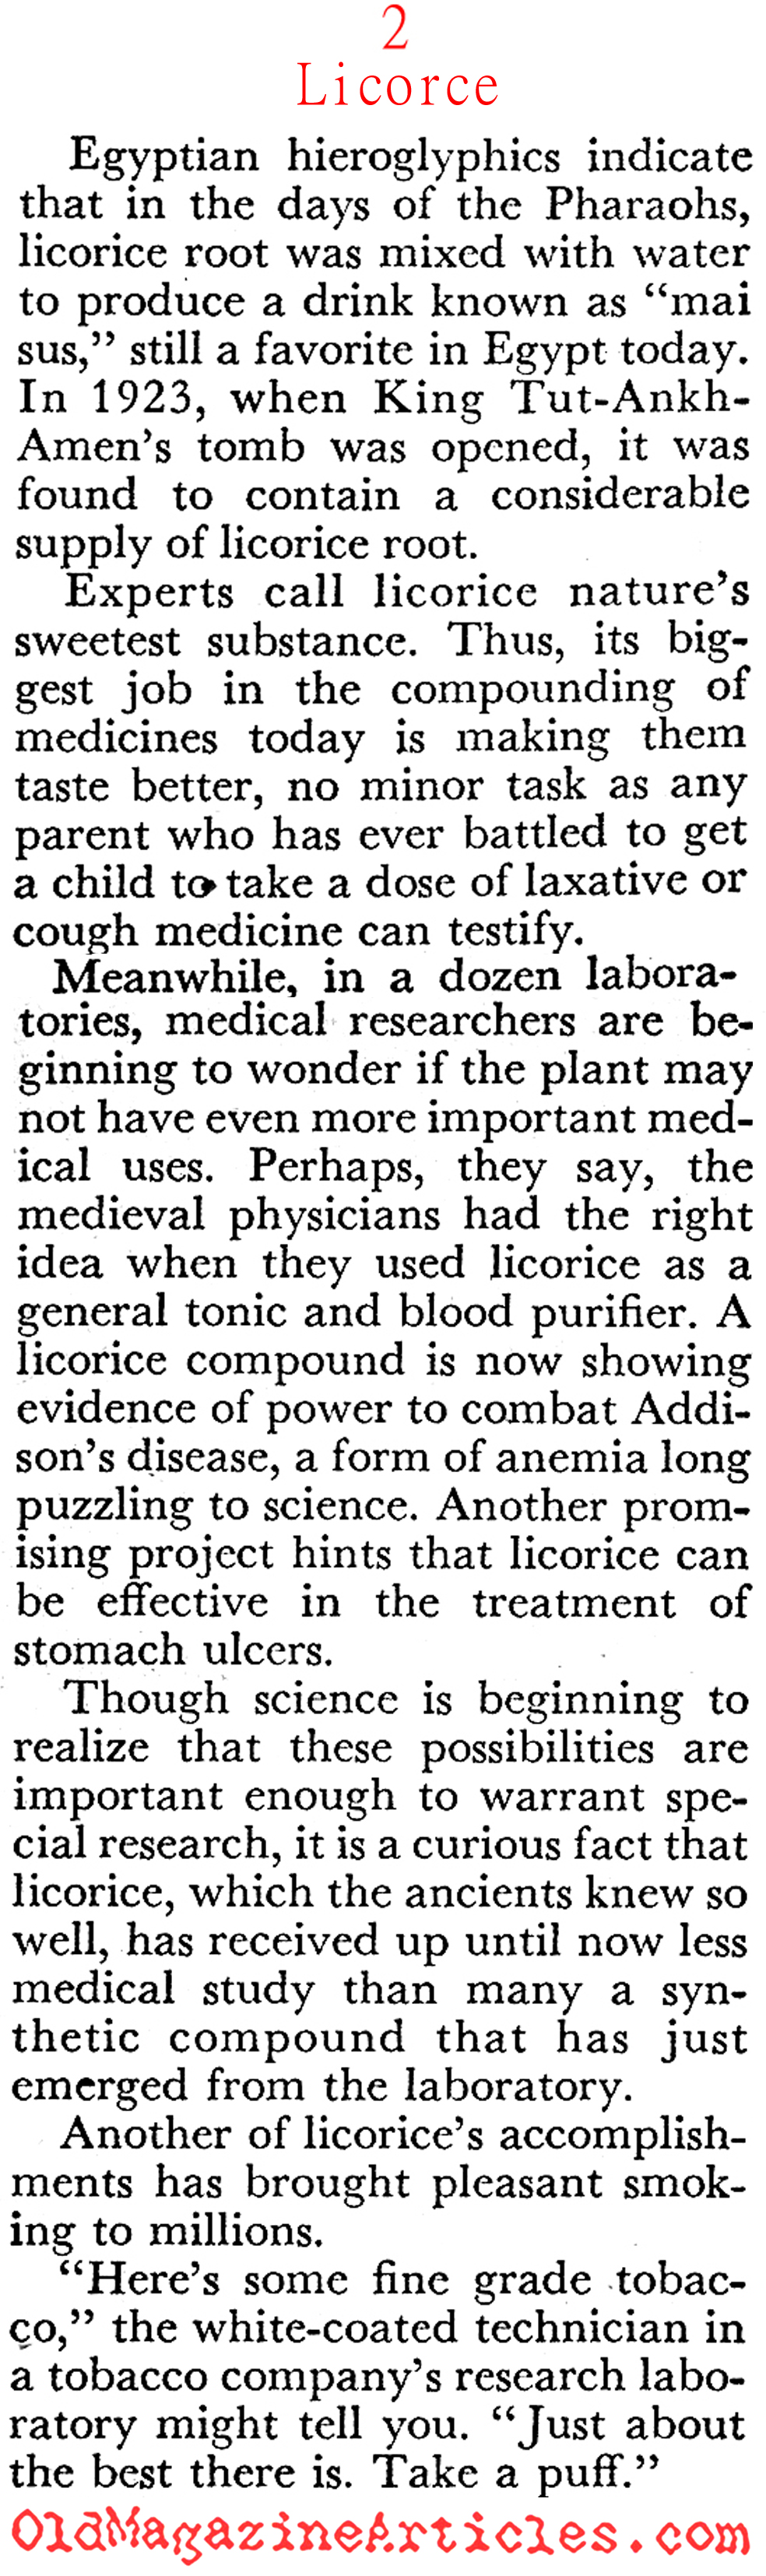 Licorice (Coronet Magazine, 1954)